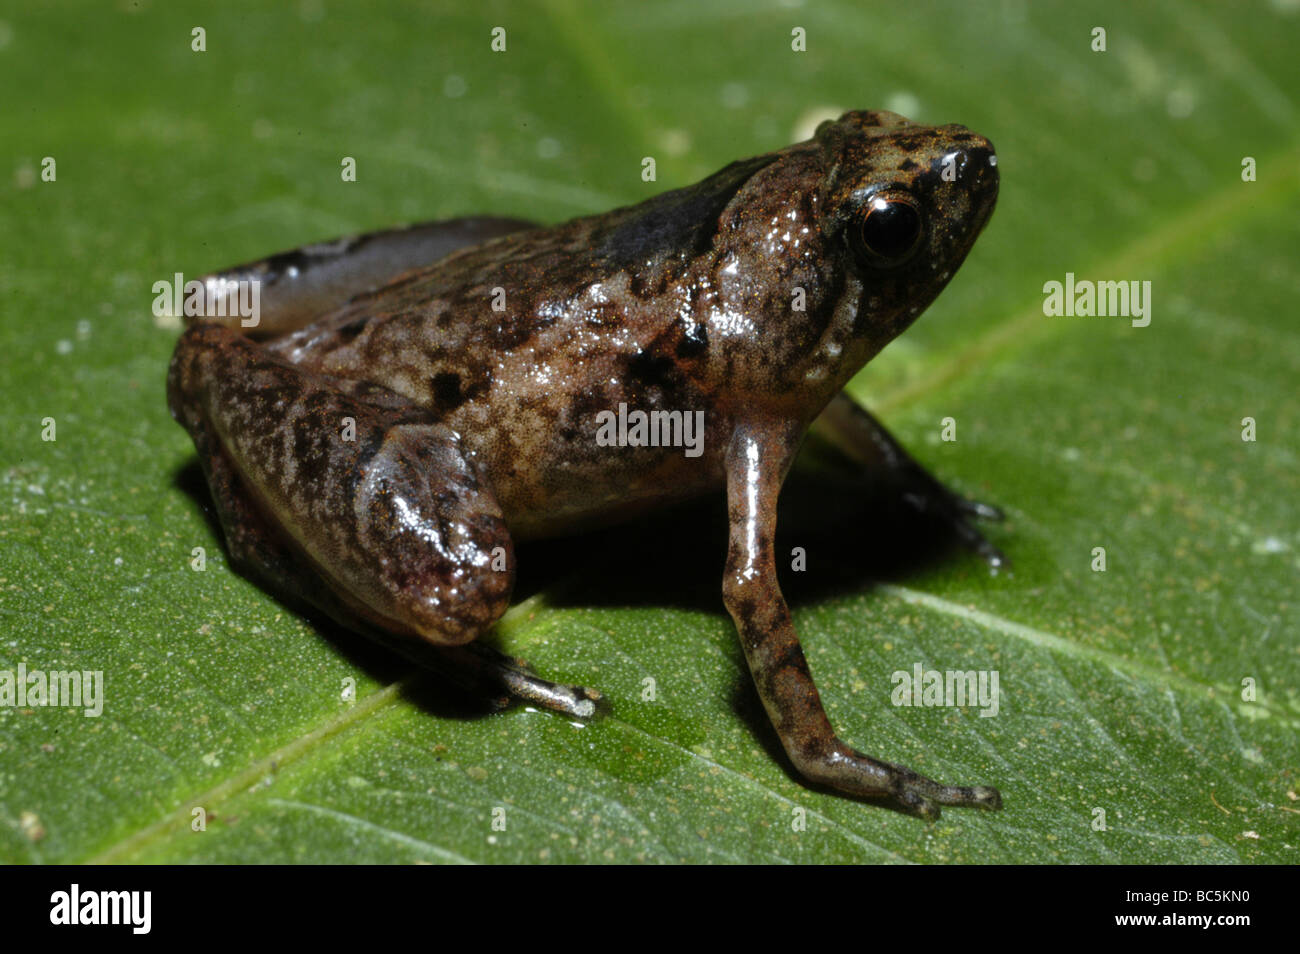 Kapit Rice Frog, Microhyla petrigena, sitting on a leaf Stock Photo